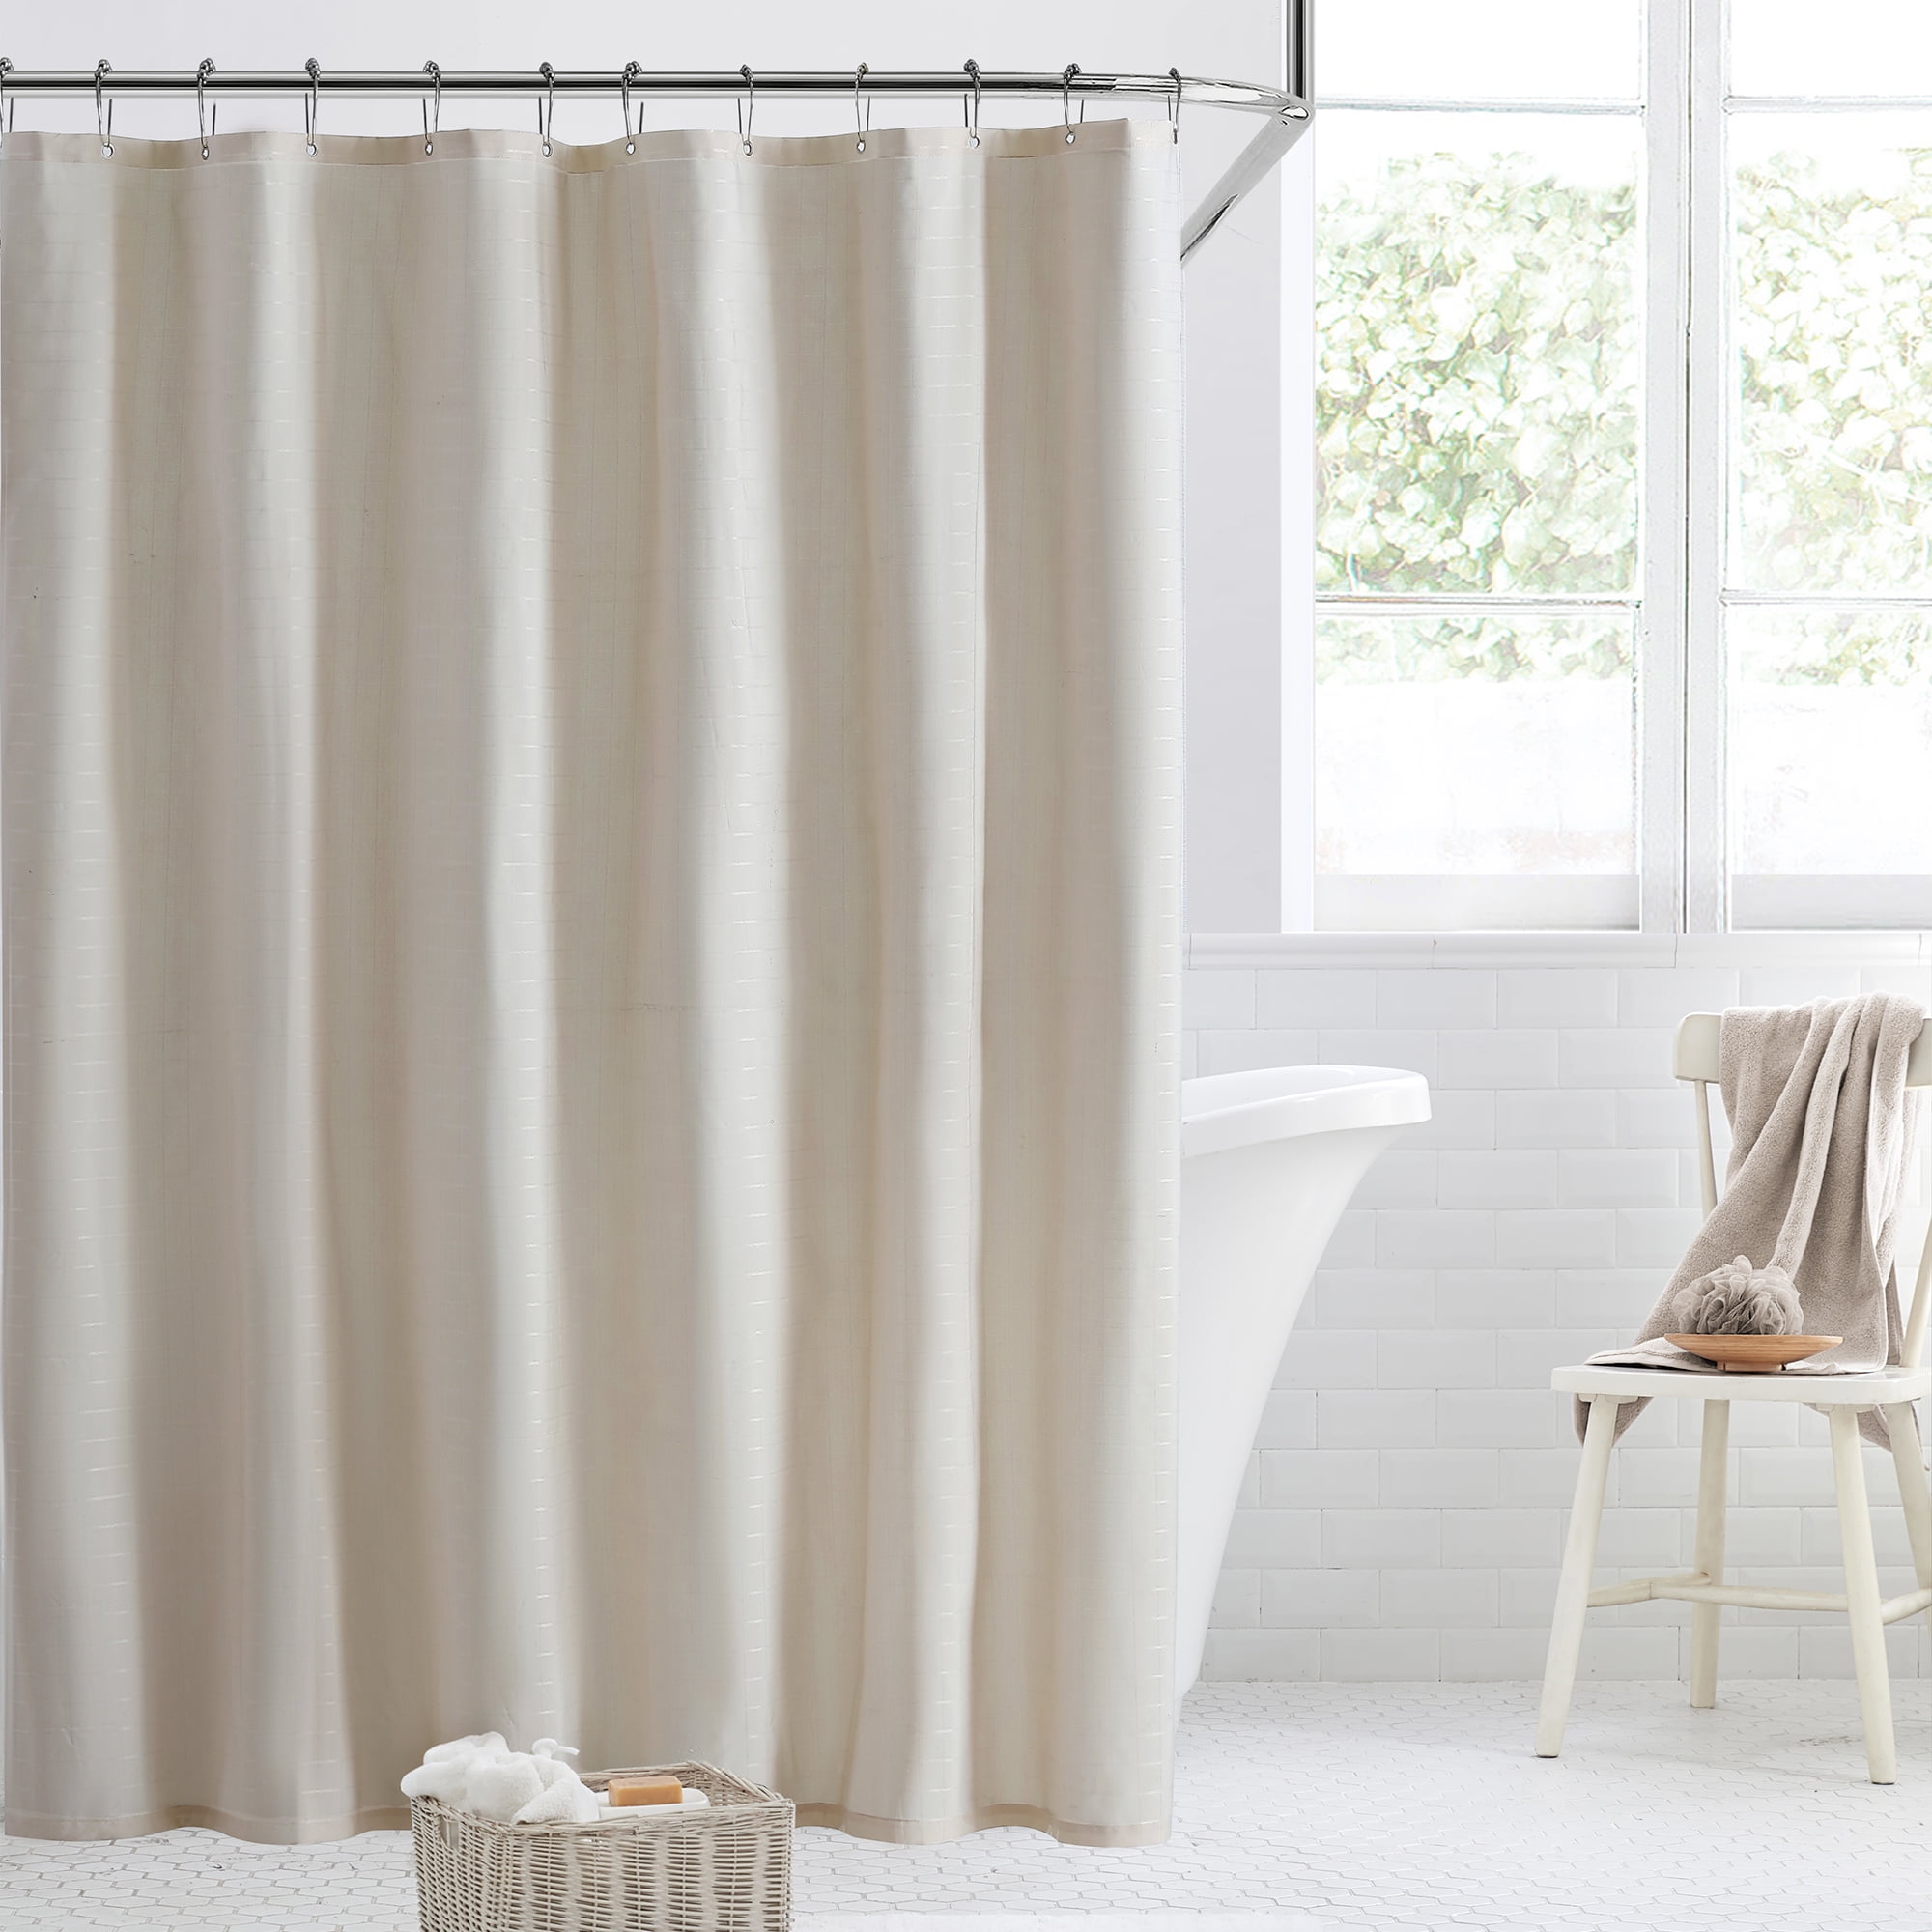 Clorox Waterproof Fabric Shower Curtain, Tan, Checkered Pattern, 72" x 72"